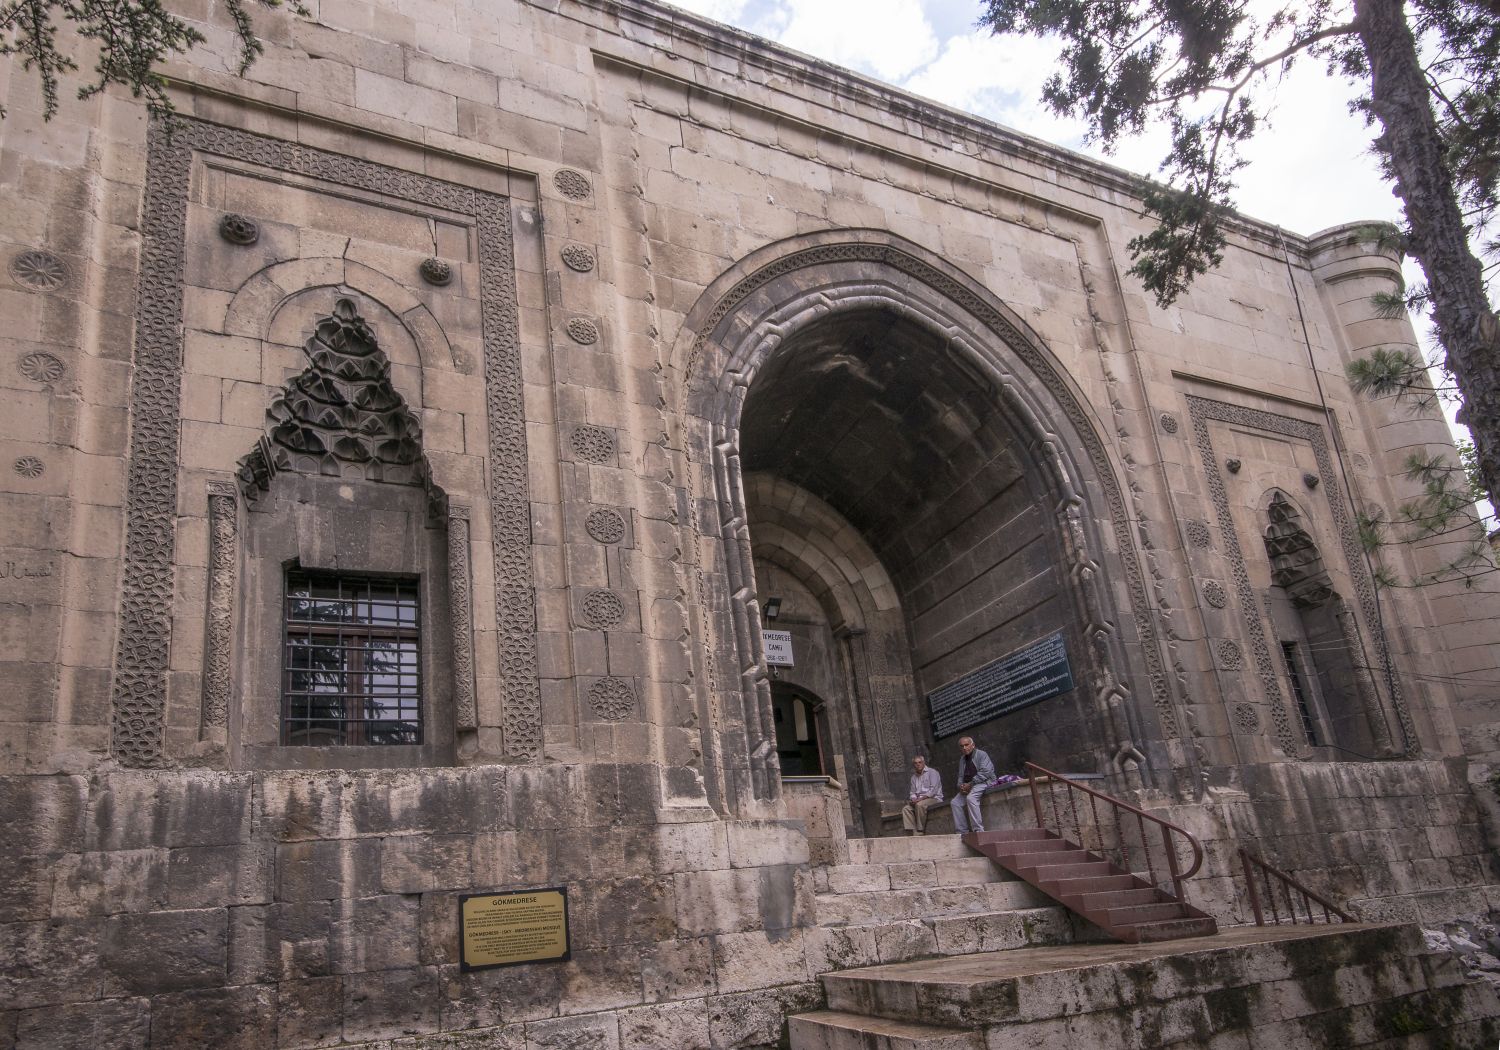 View of north facade showing main entrance portal.